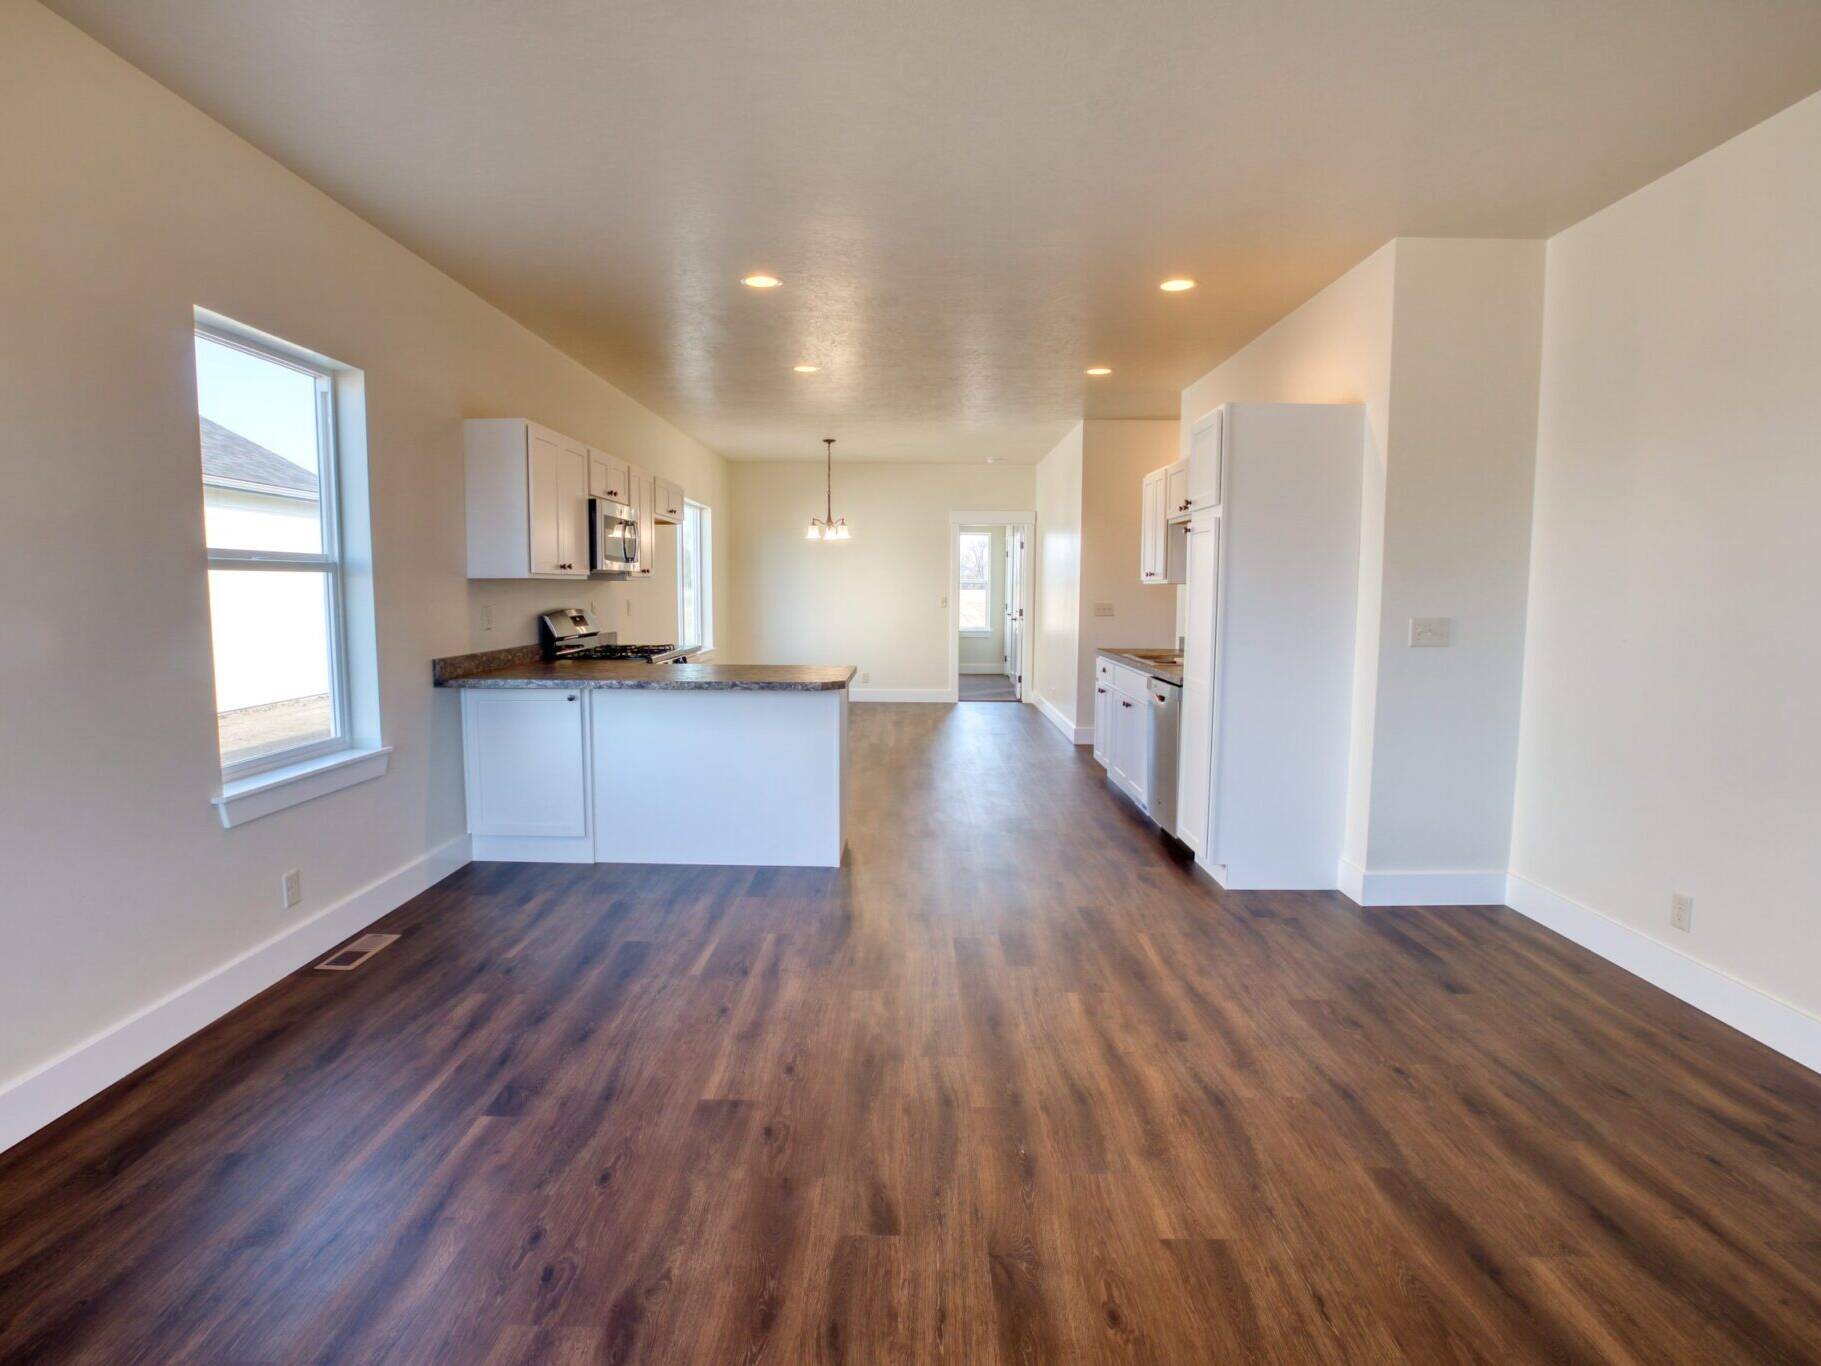 Living Room area in the Mill Creek model home - built by Big Sky Builders in Corvallis, MT